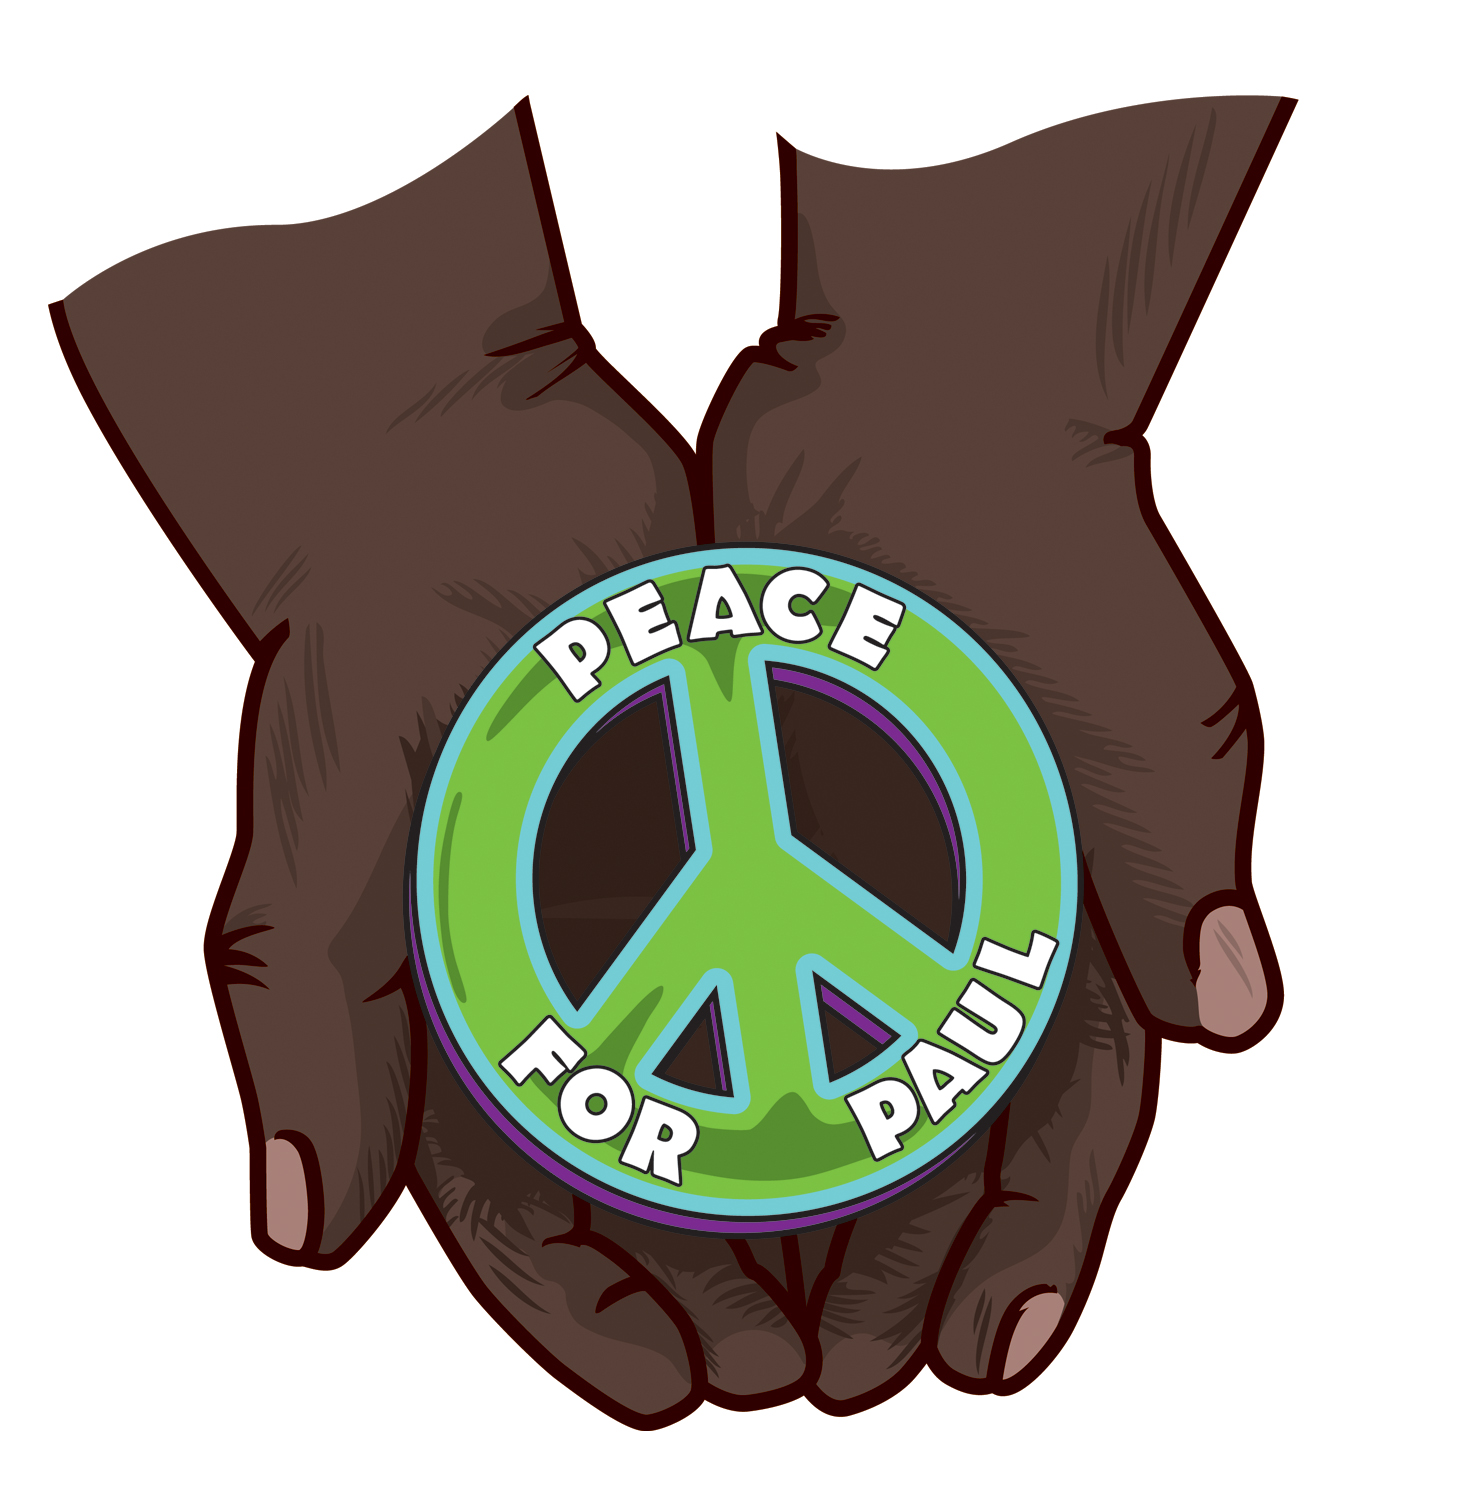 The Peace for Paul Foundation logo